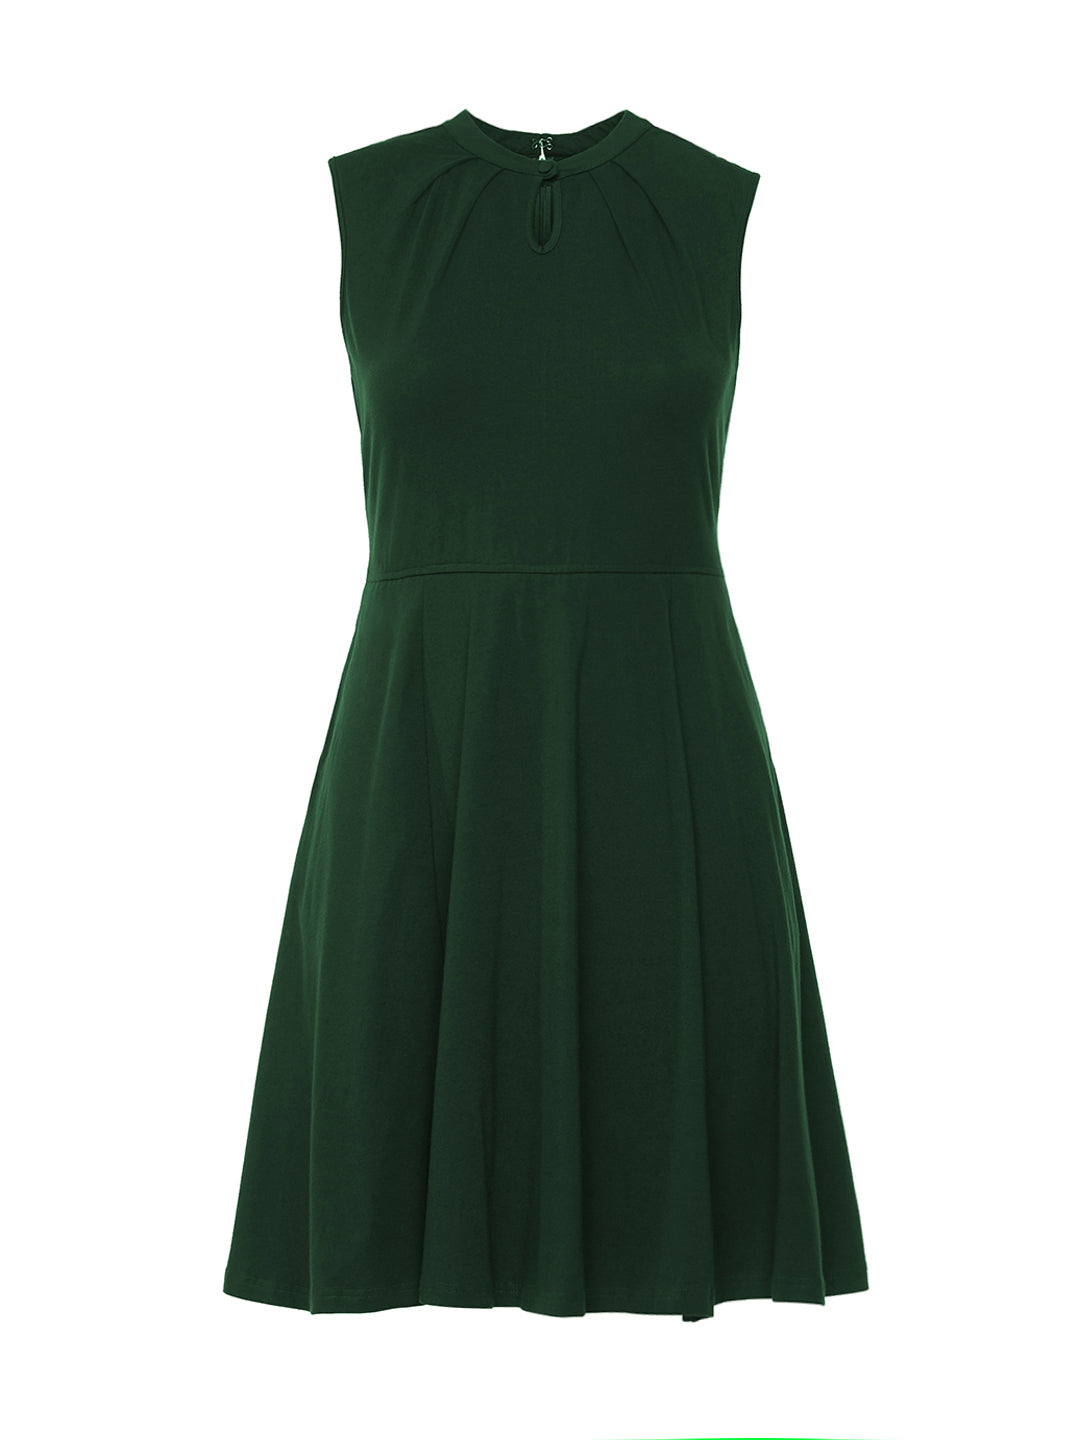 green fit flare dress